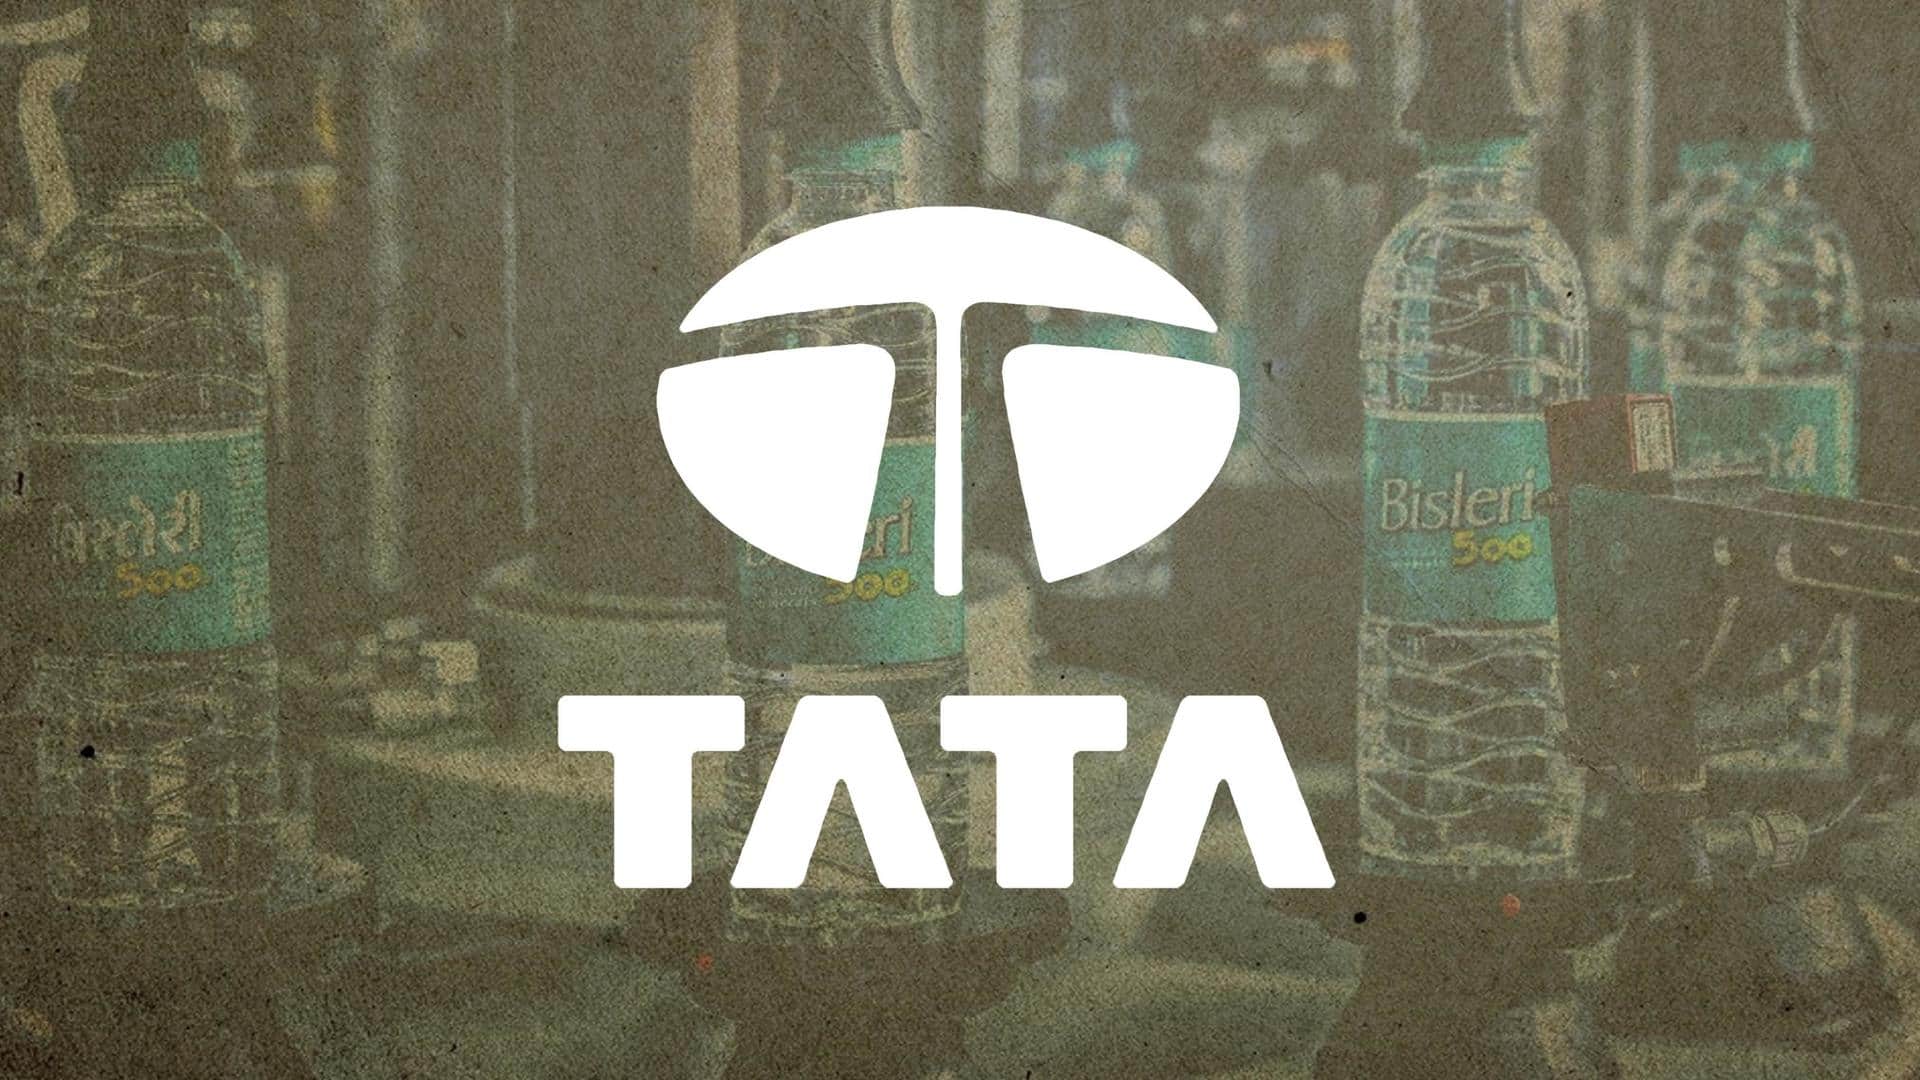 Tata Consumer to acquire Bisleri for around Rs. 7,000 crore